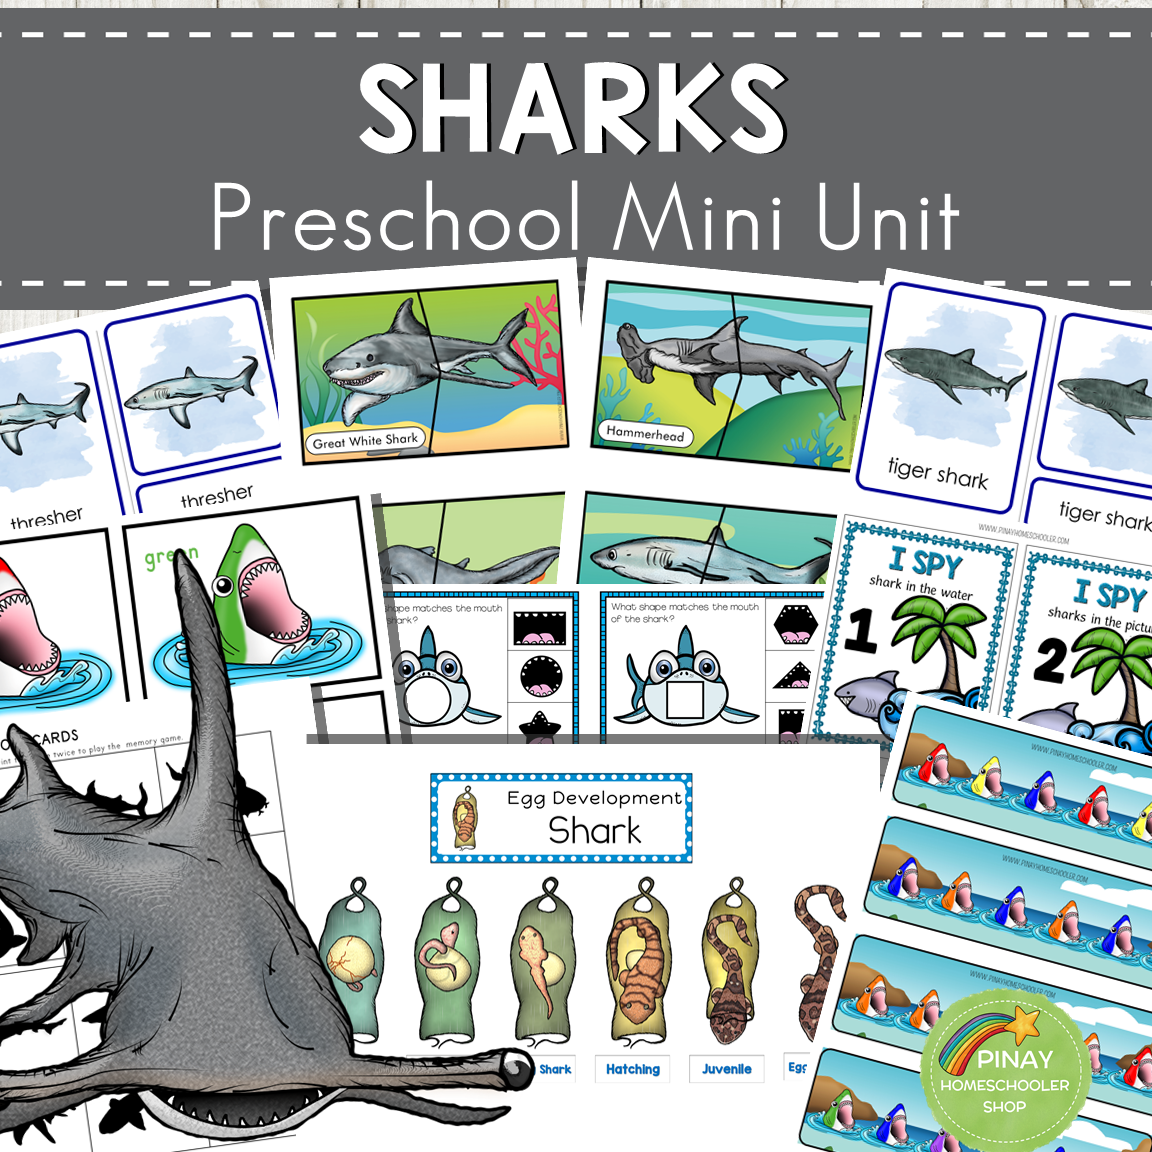 Sharks Preschool Mini Unit Activities